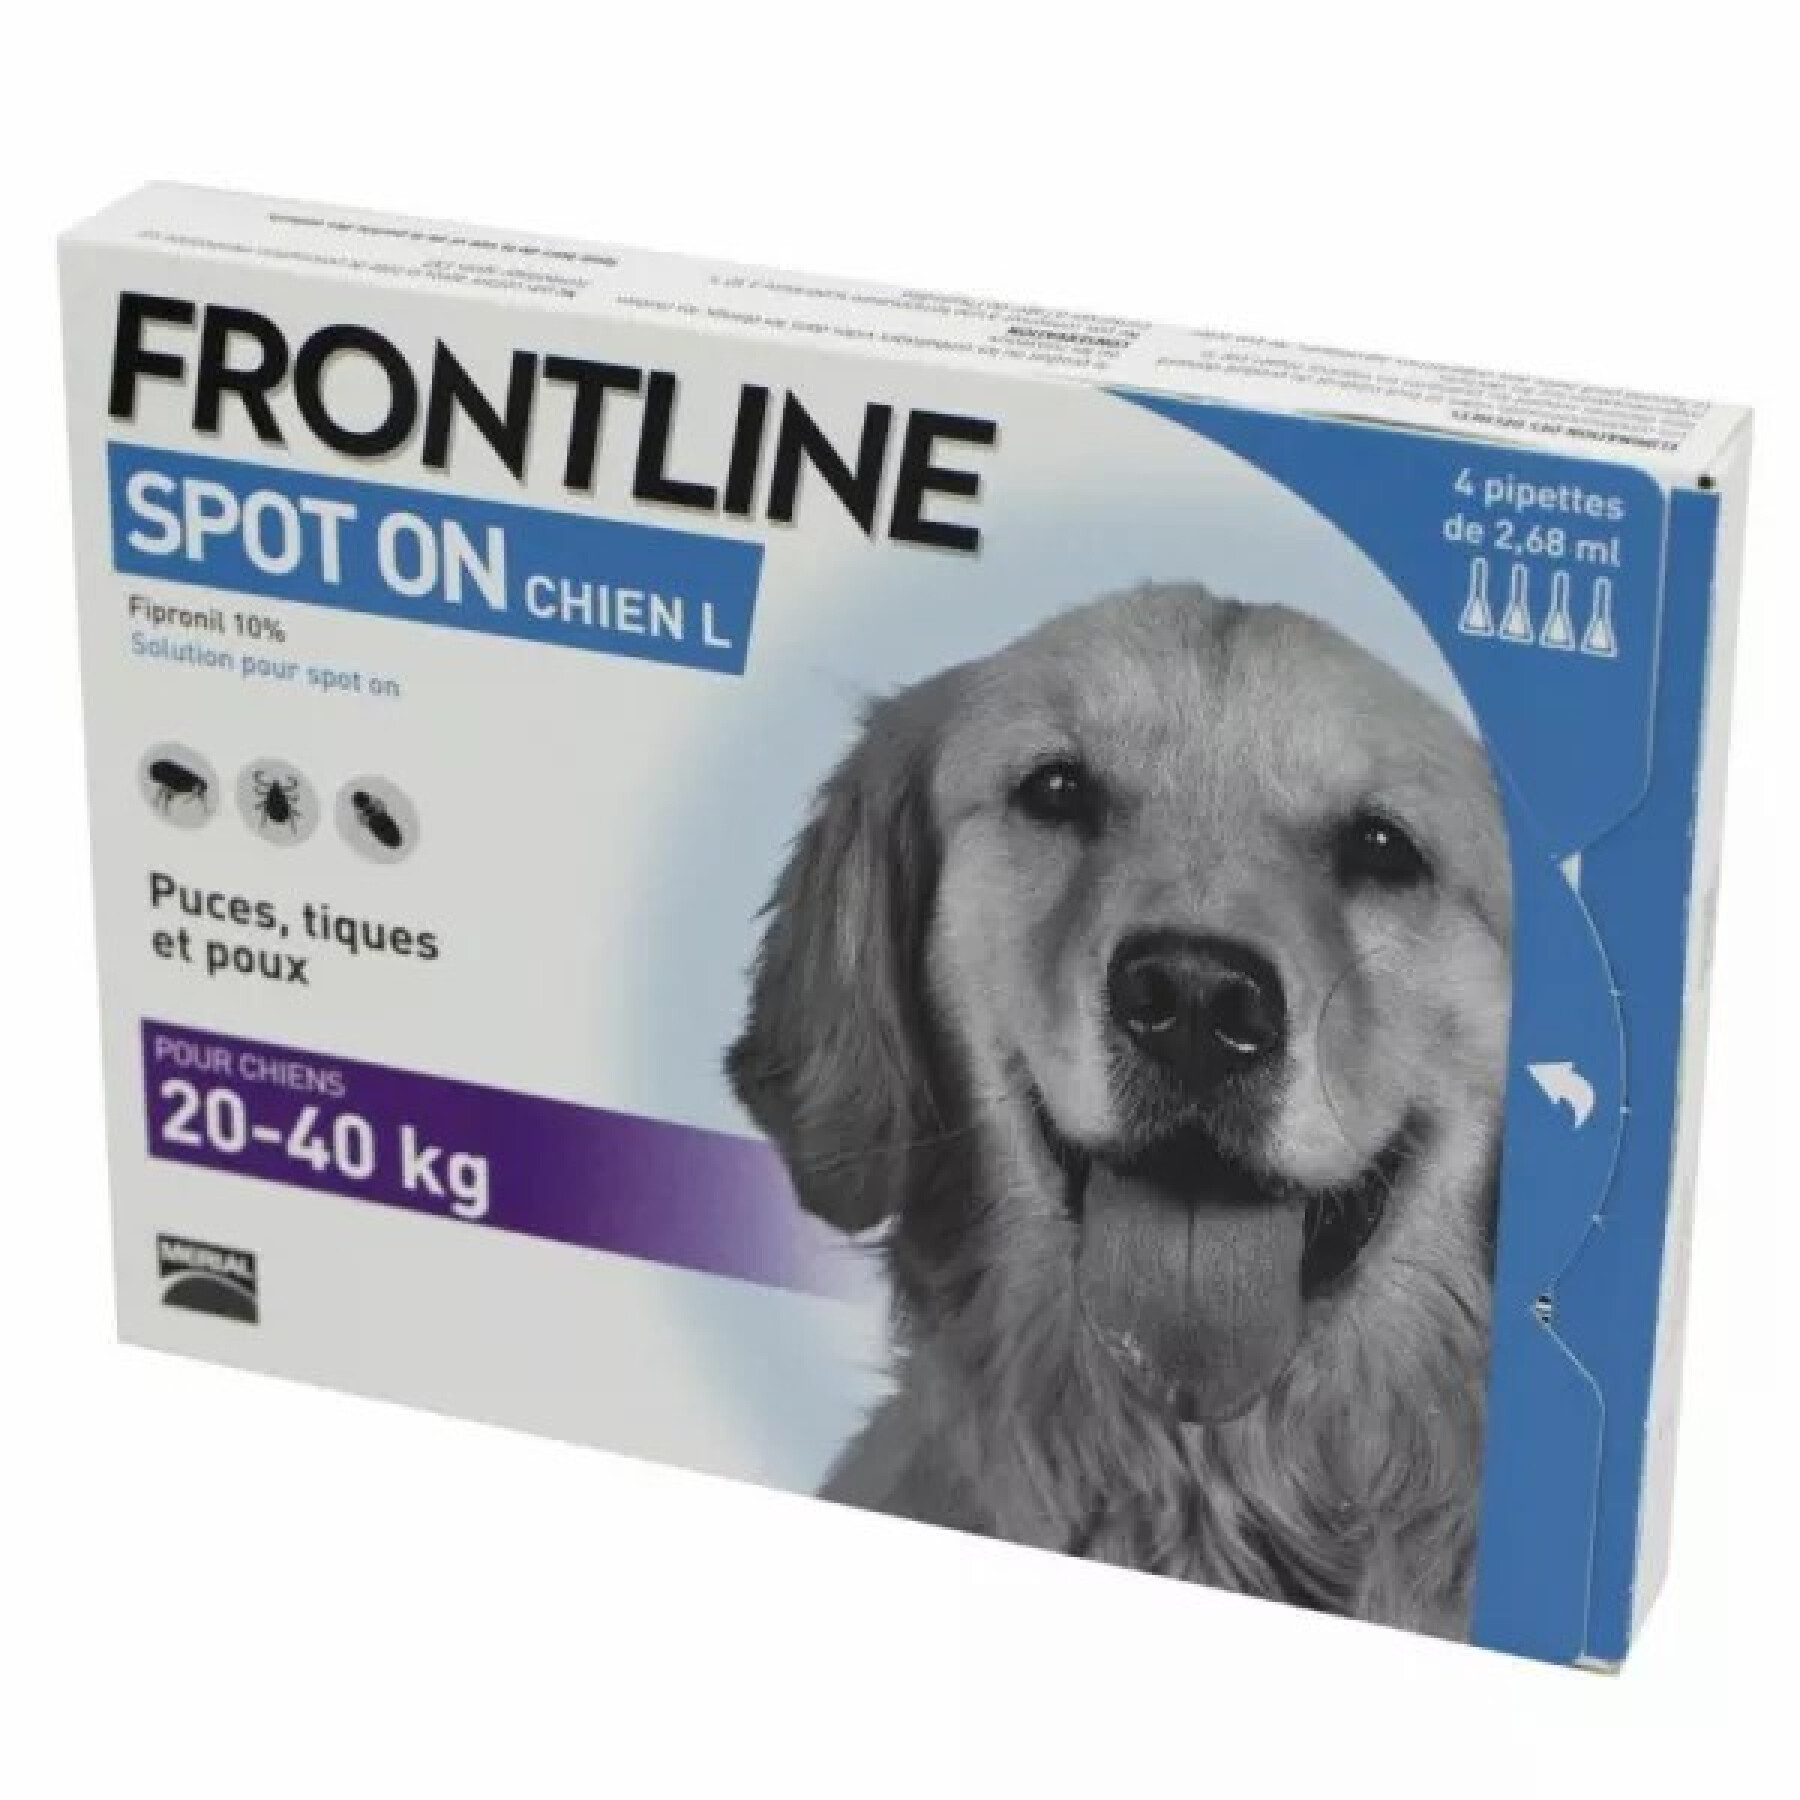 Pest control for dogs Frontline de 20/40 kg Spot On (x4)